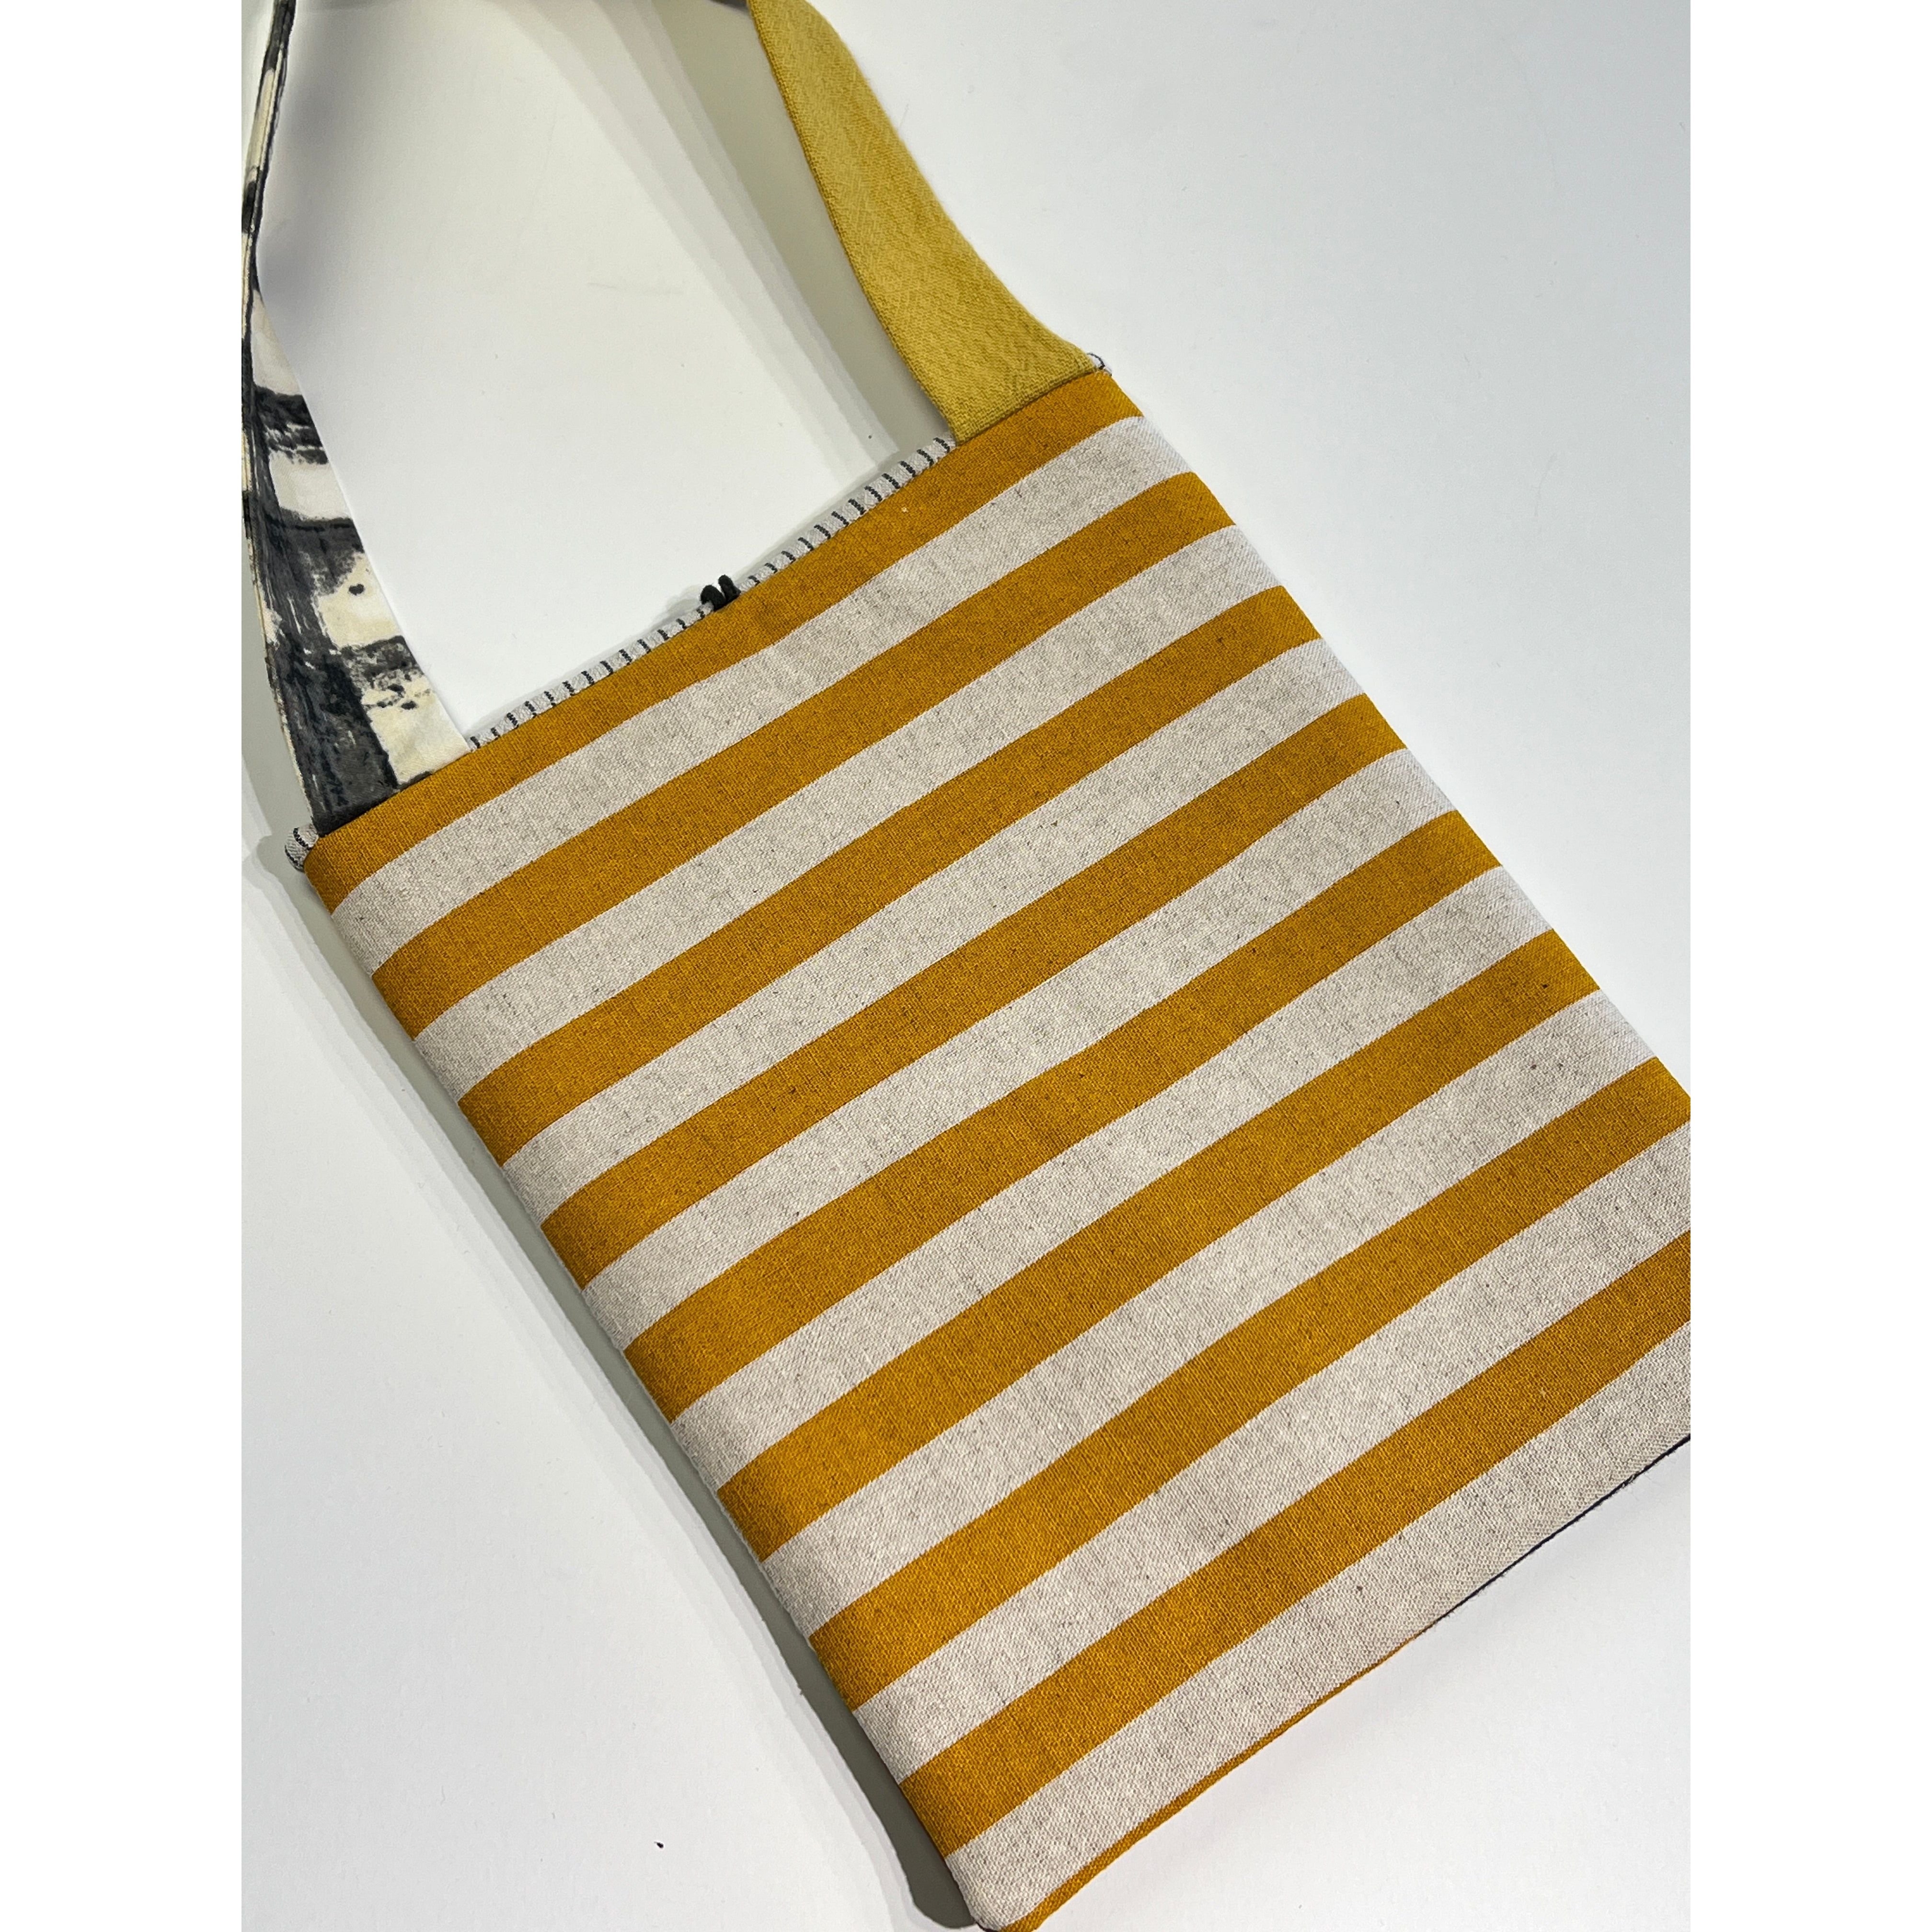 Juanita Girardin Small Bag, Pieced Japanese Cotton,Yellow Birch Bark